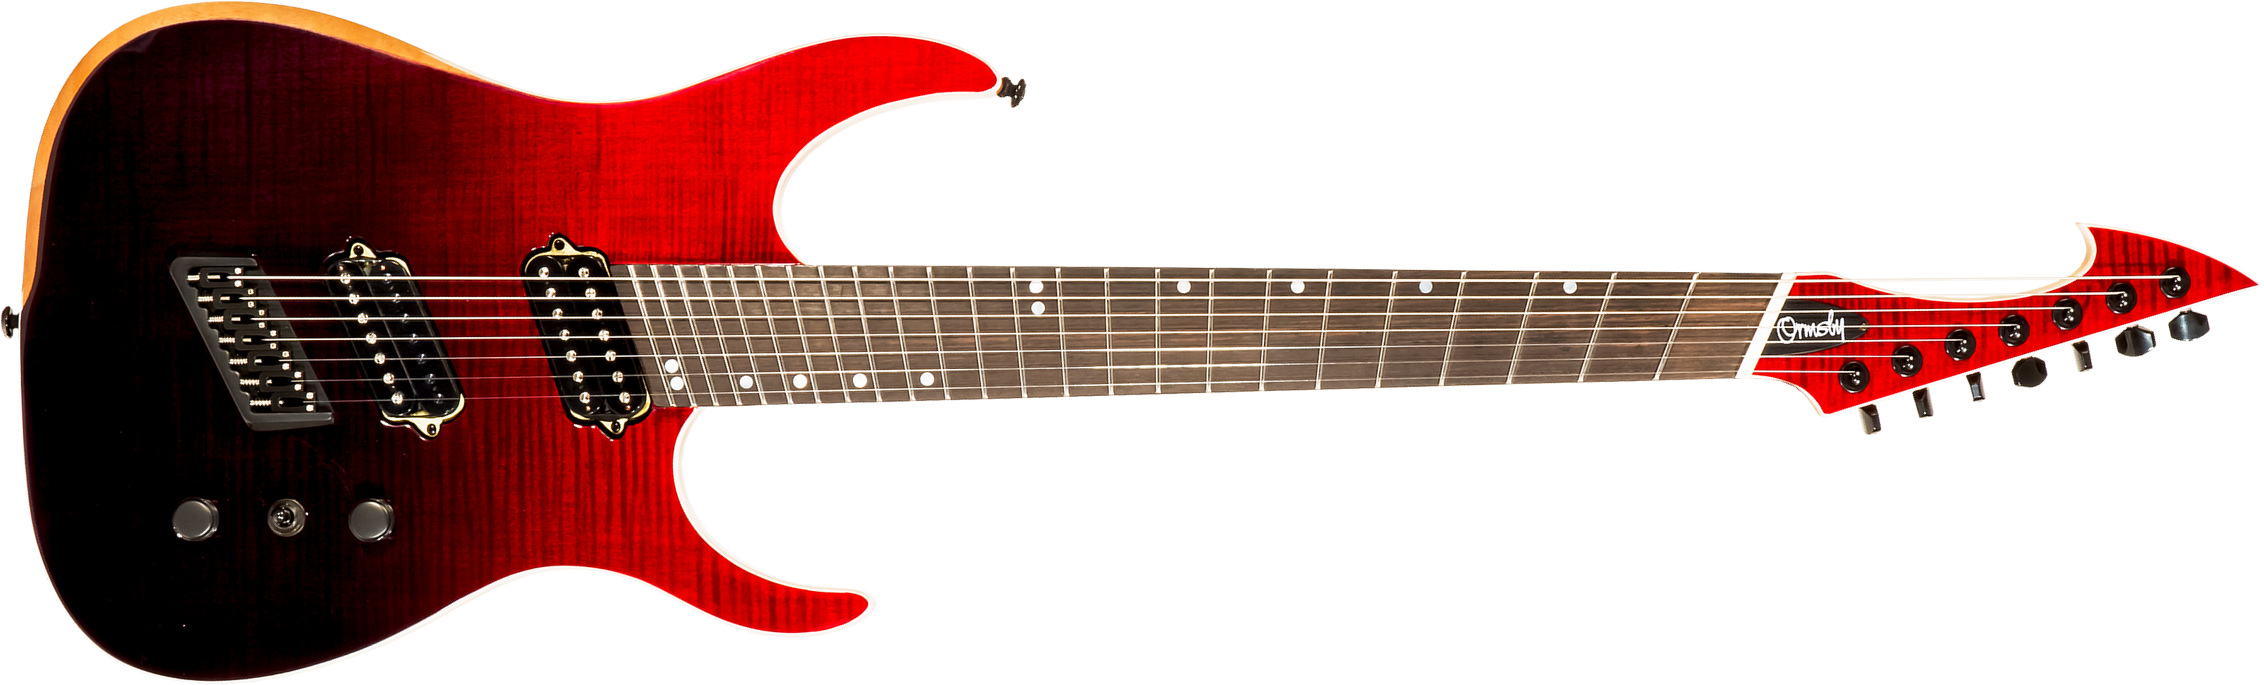 Ormsby Hype Gtr 7c Ltd Run 16 Multiscale 2h Ht Eb #gtr07630 - Blood Bath - Multi-Scale Guitar - Main picture